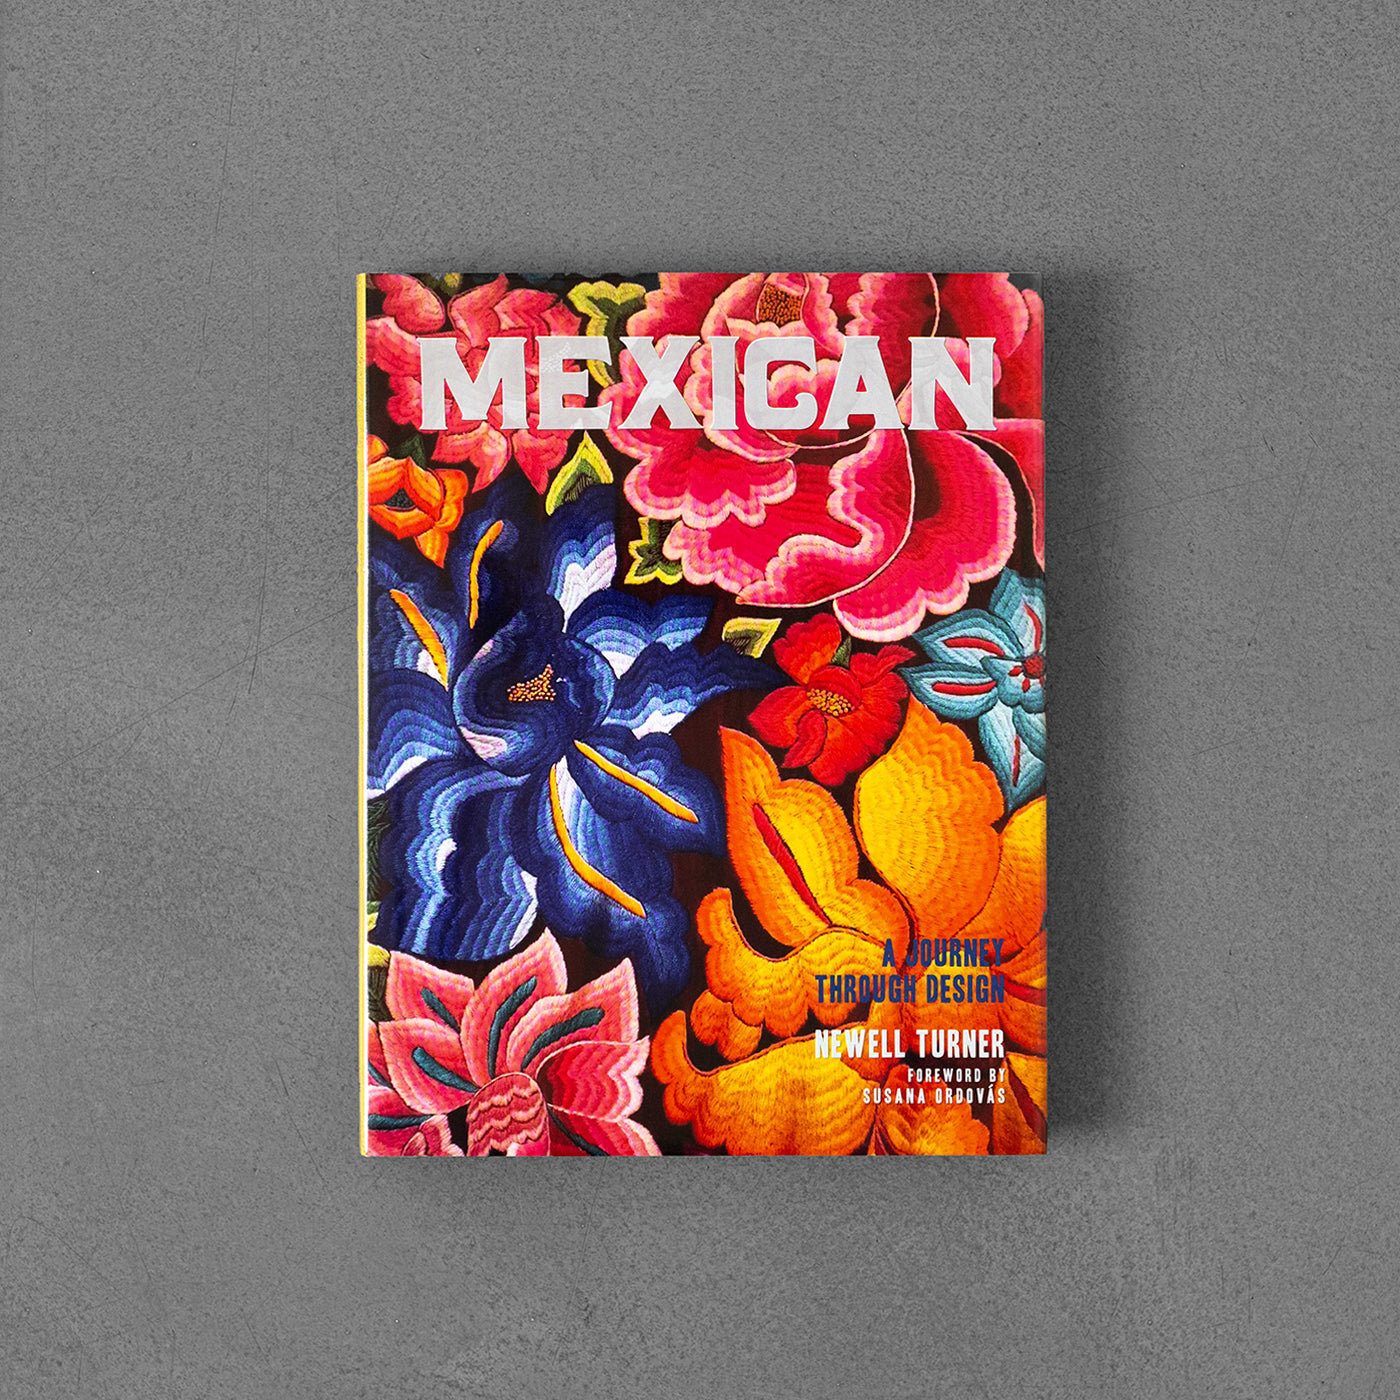 Mexican: A Journey through Design